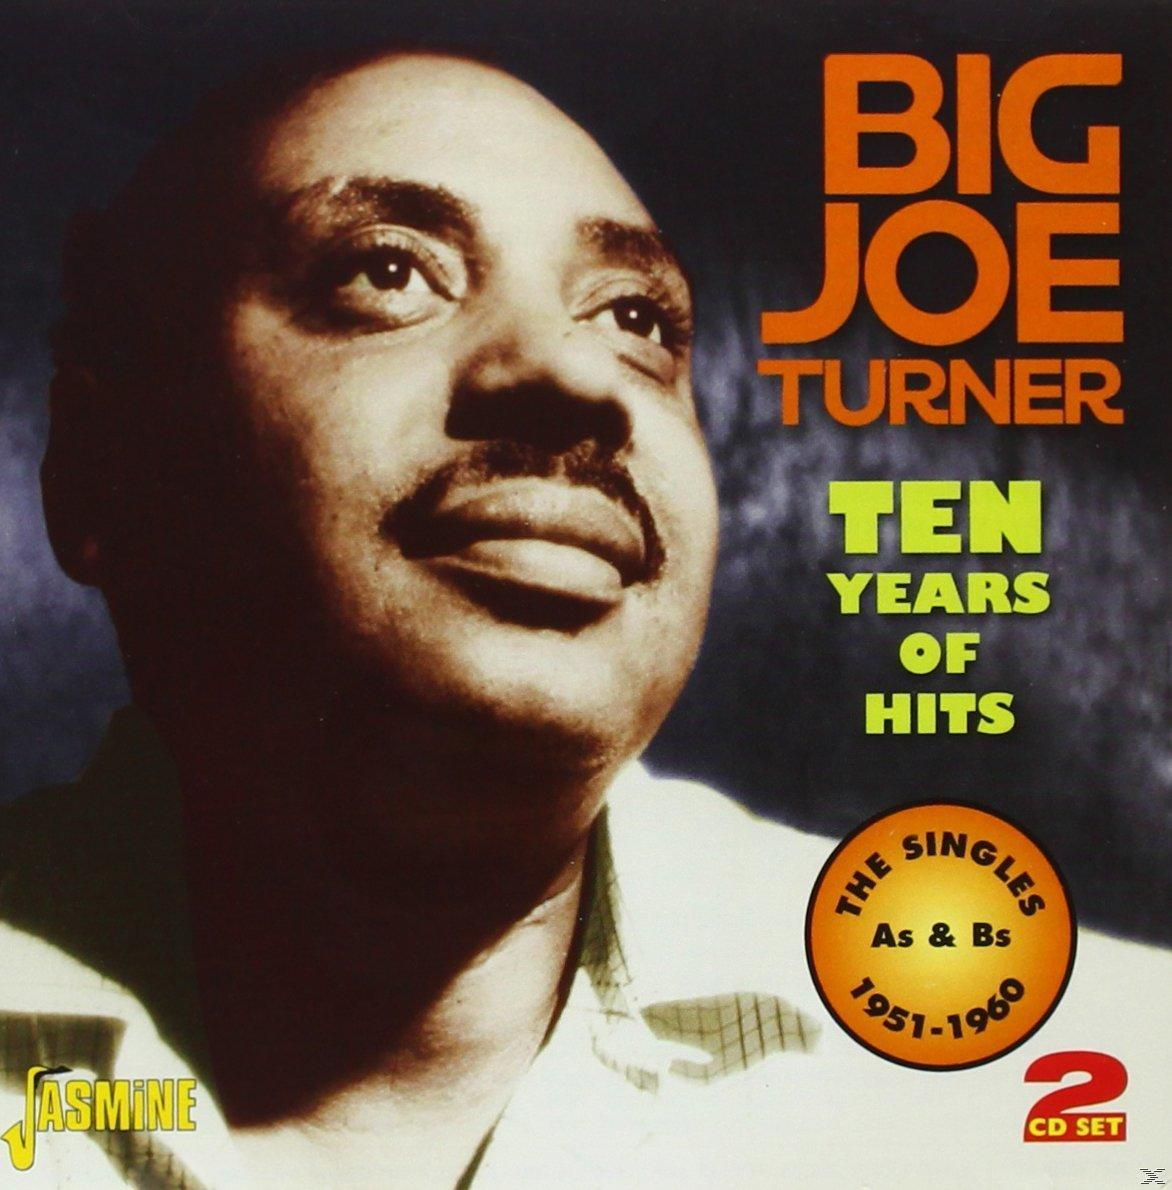 TEN OF - - (CD) YEARS -48TR- Turner HITS Big Joe